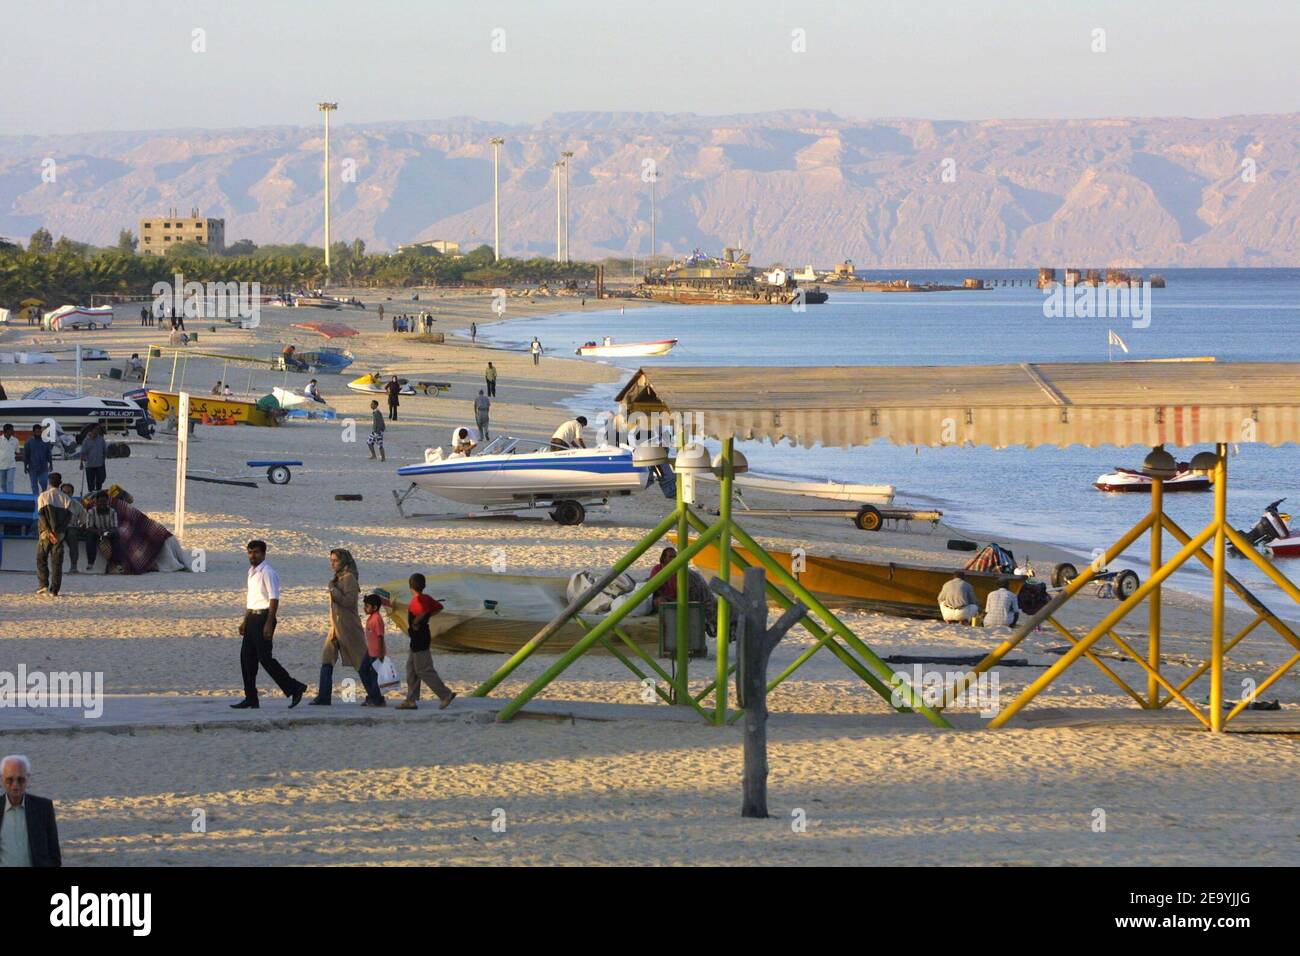 A beach of Iran's island Kish, in the Persian Gulf, 12 kilometres off the Iranian coasts, in April 2004. Photo by Orand-Viala/ABACA. Stock Photo